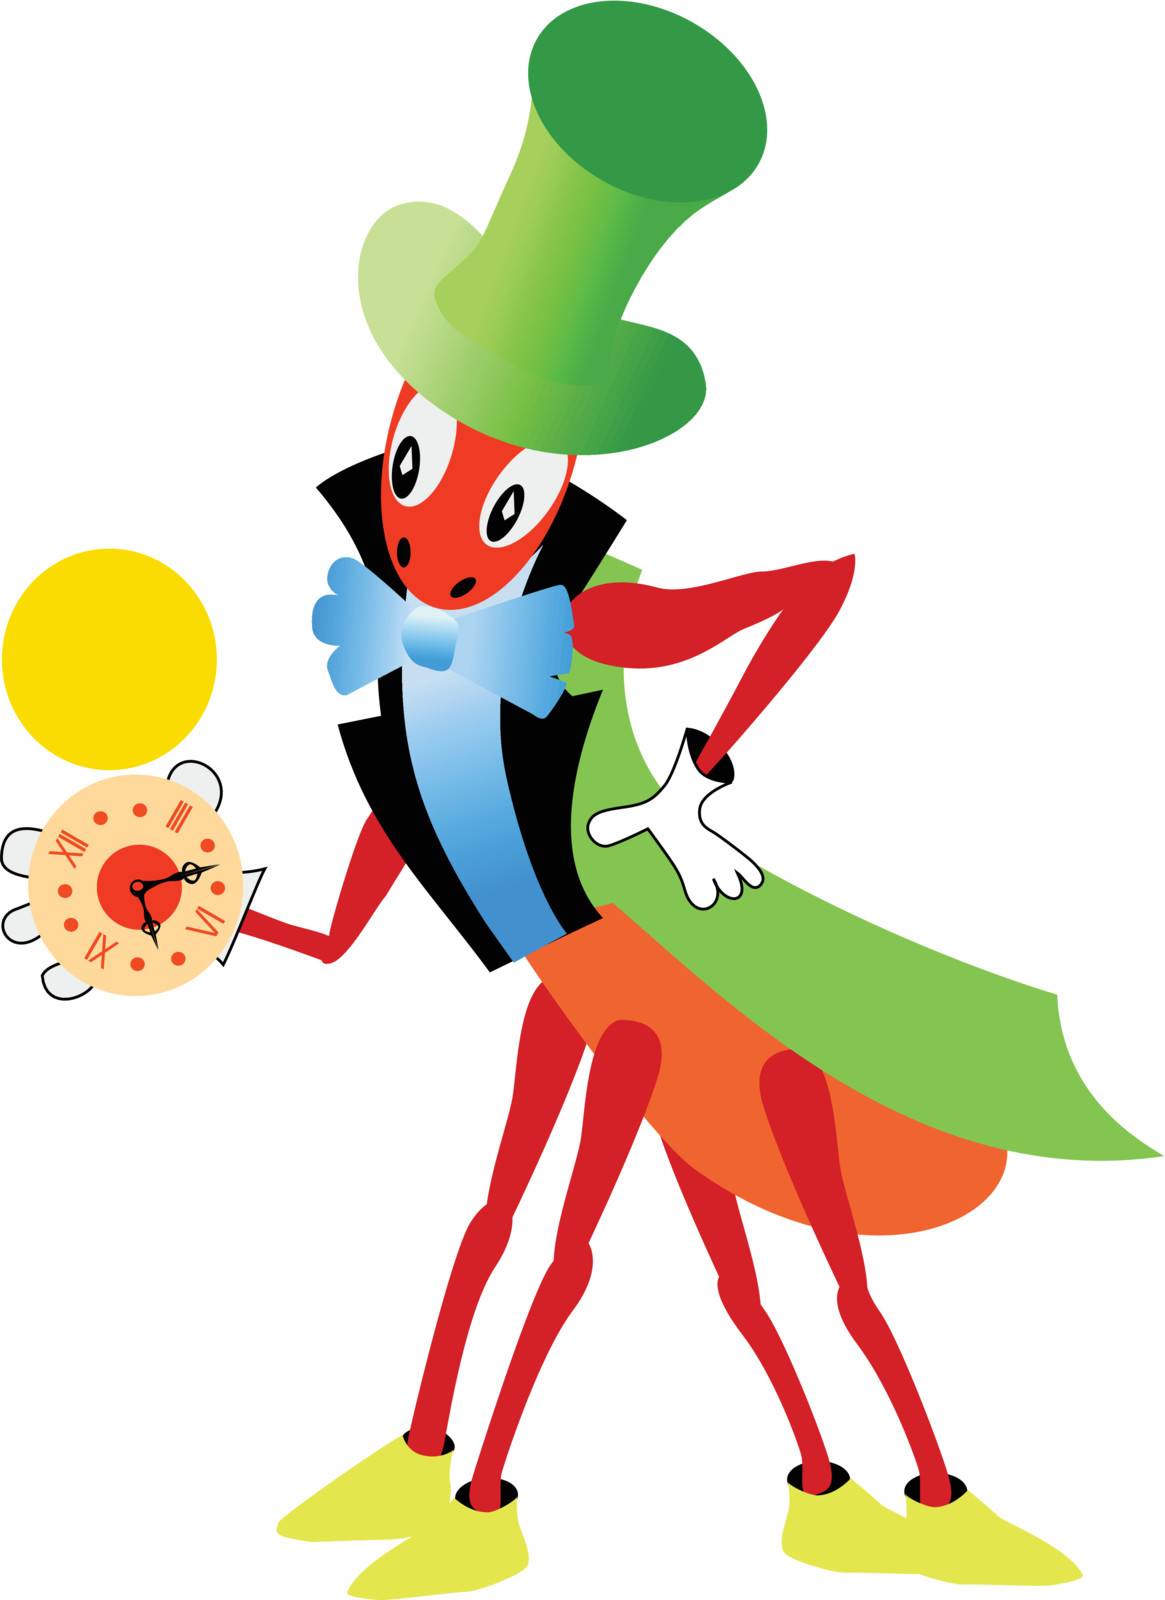 Cartoon image of a fairy character cricket